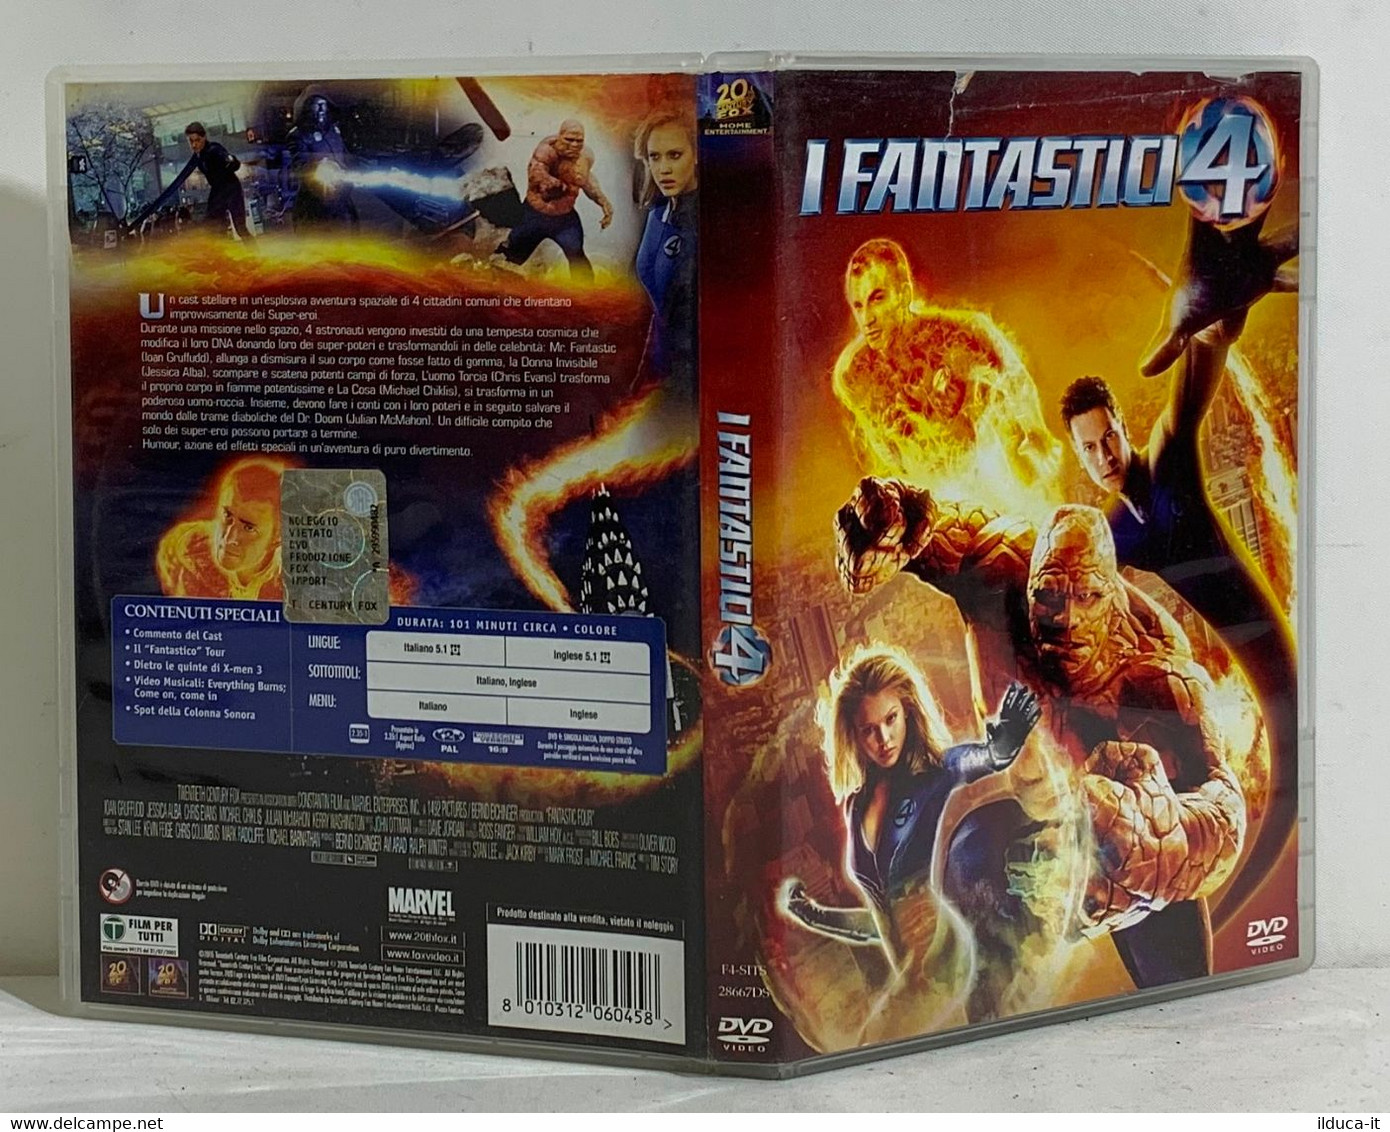 I100808 DVD - I Fantastici 4 (2005) - Jessica Alba / Chris Evans - Science-Fiction & Fantasy